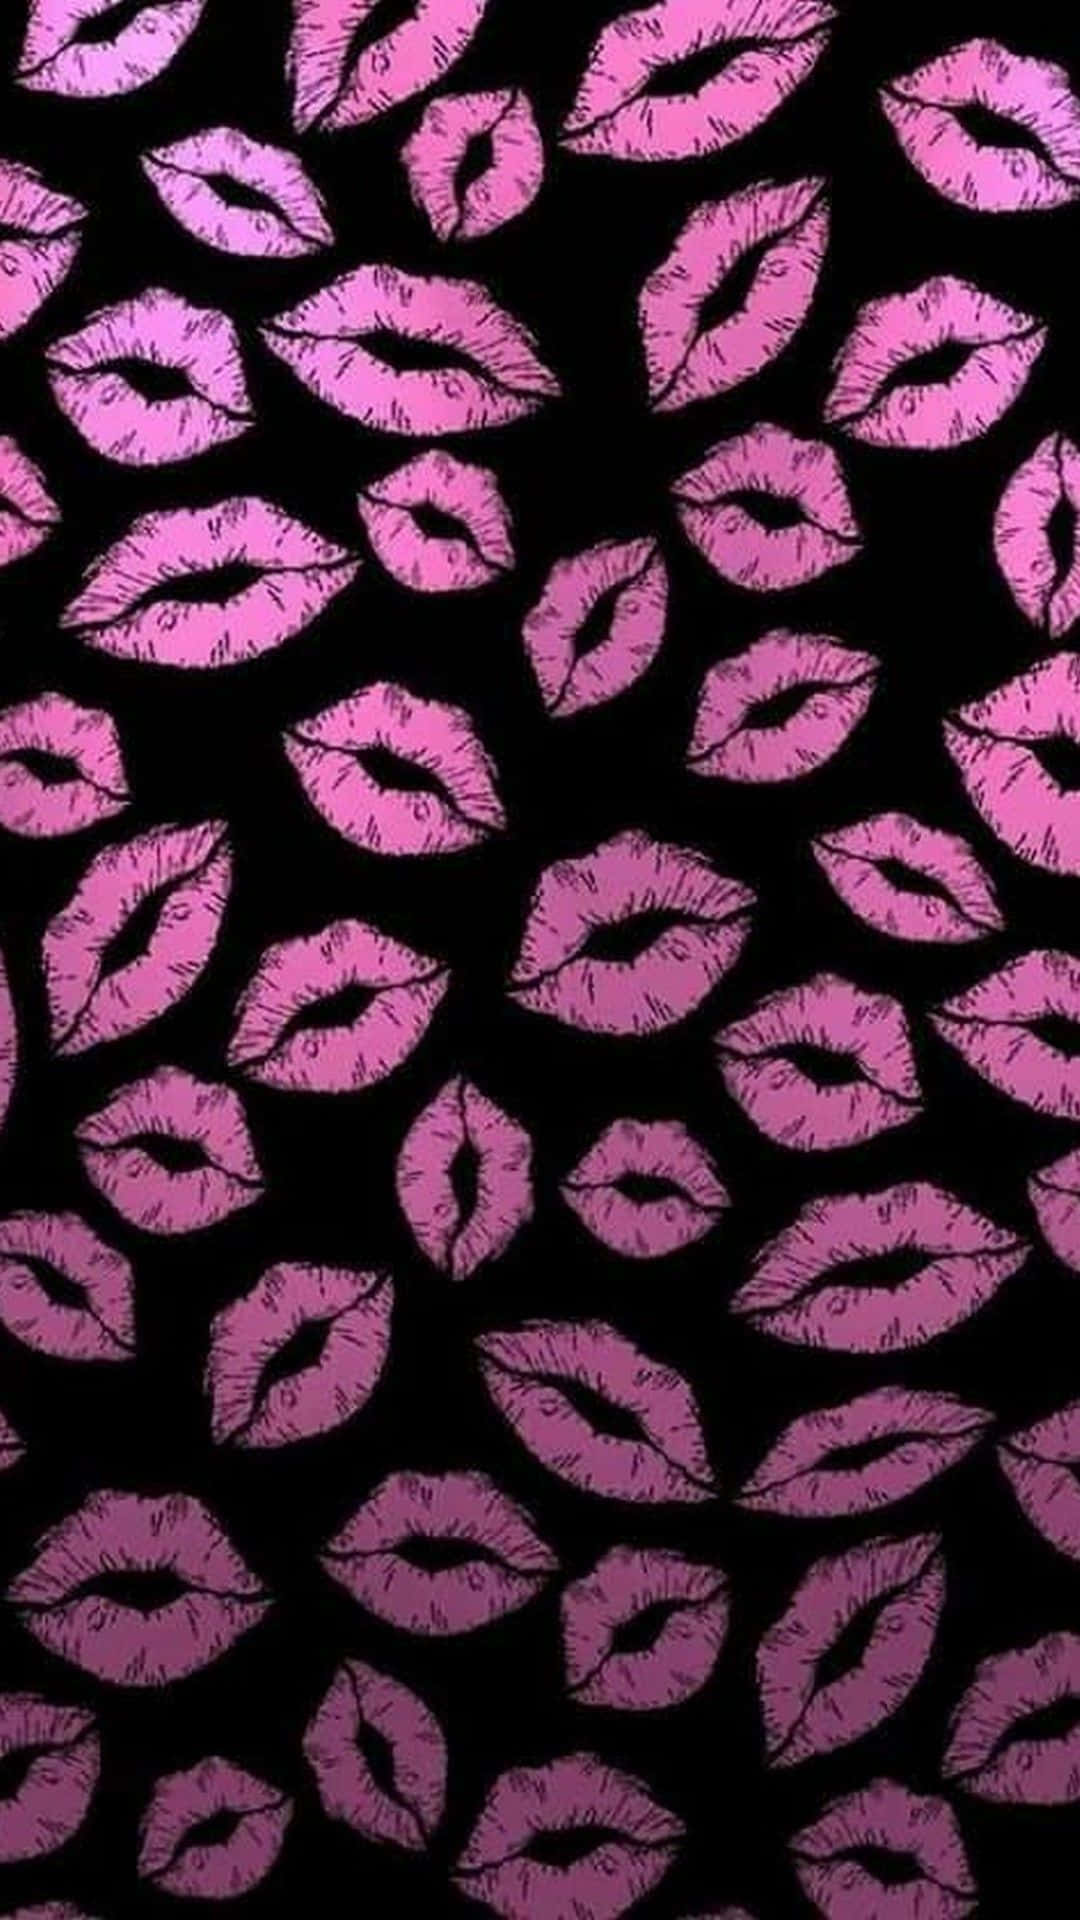 Kiss wallpaper  Lip wallpaper Lipstick mark Pink and red wallpapers